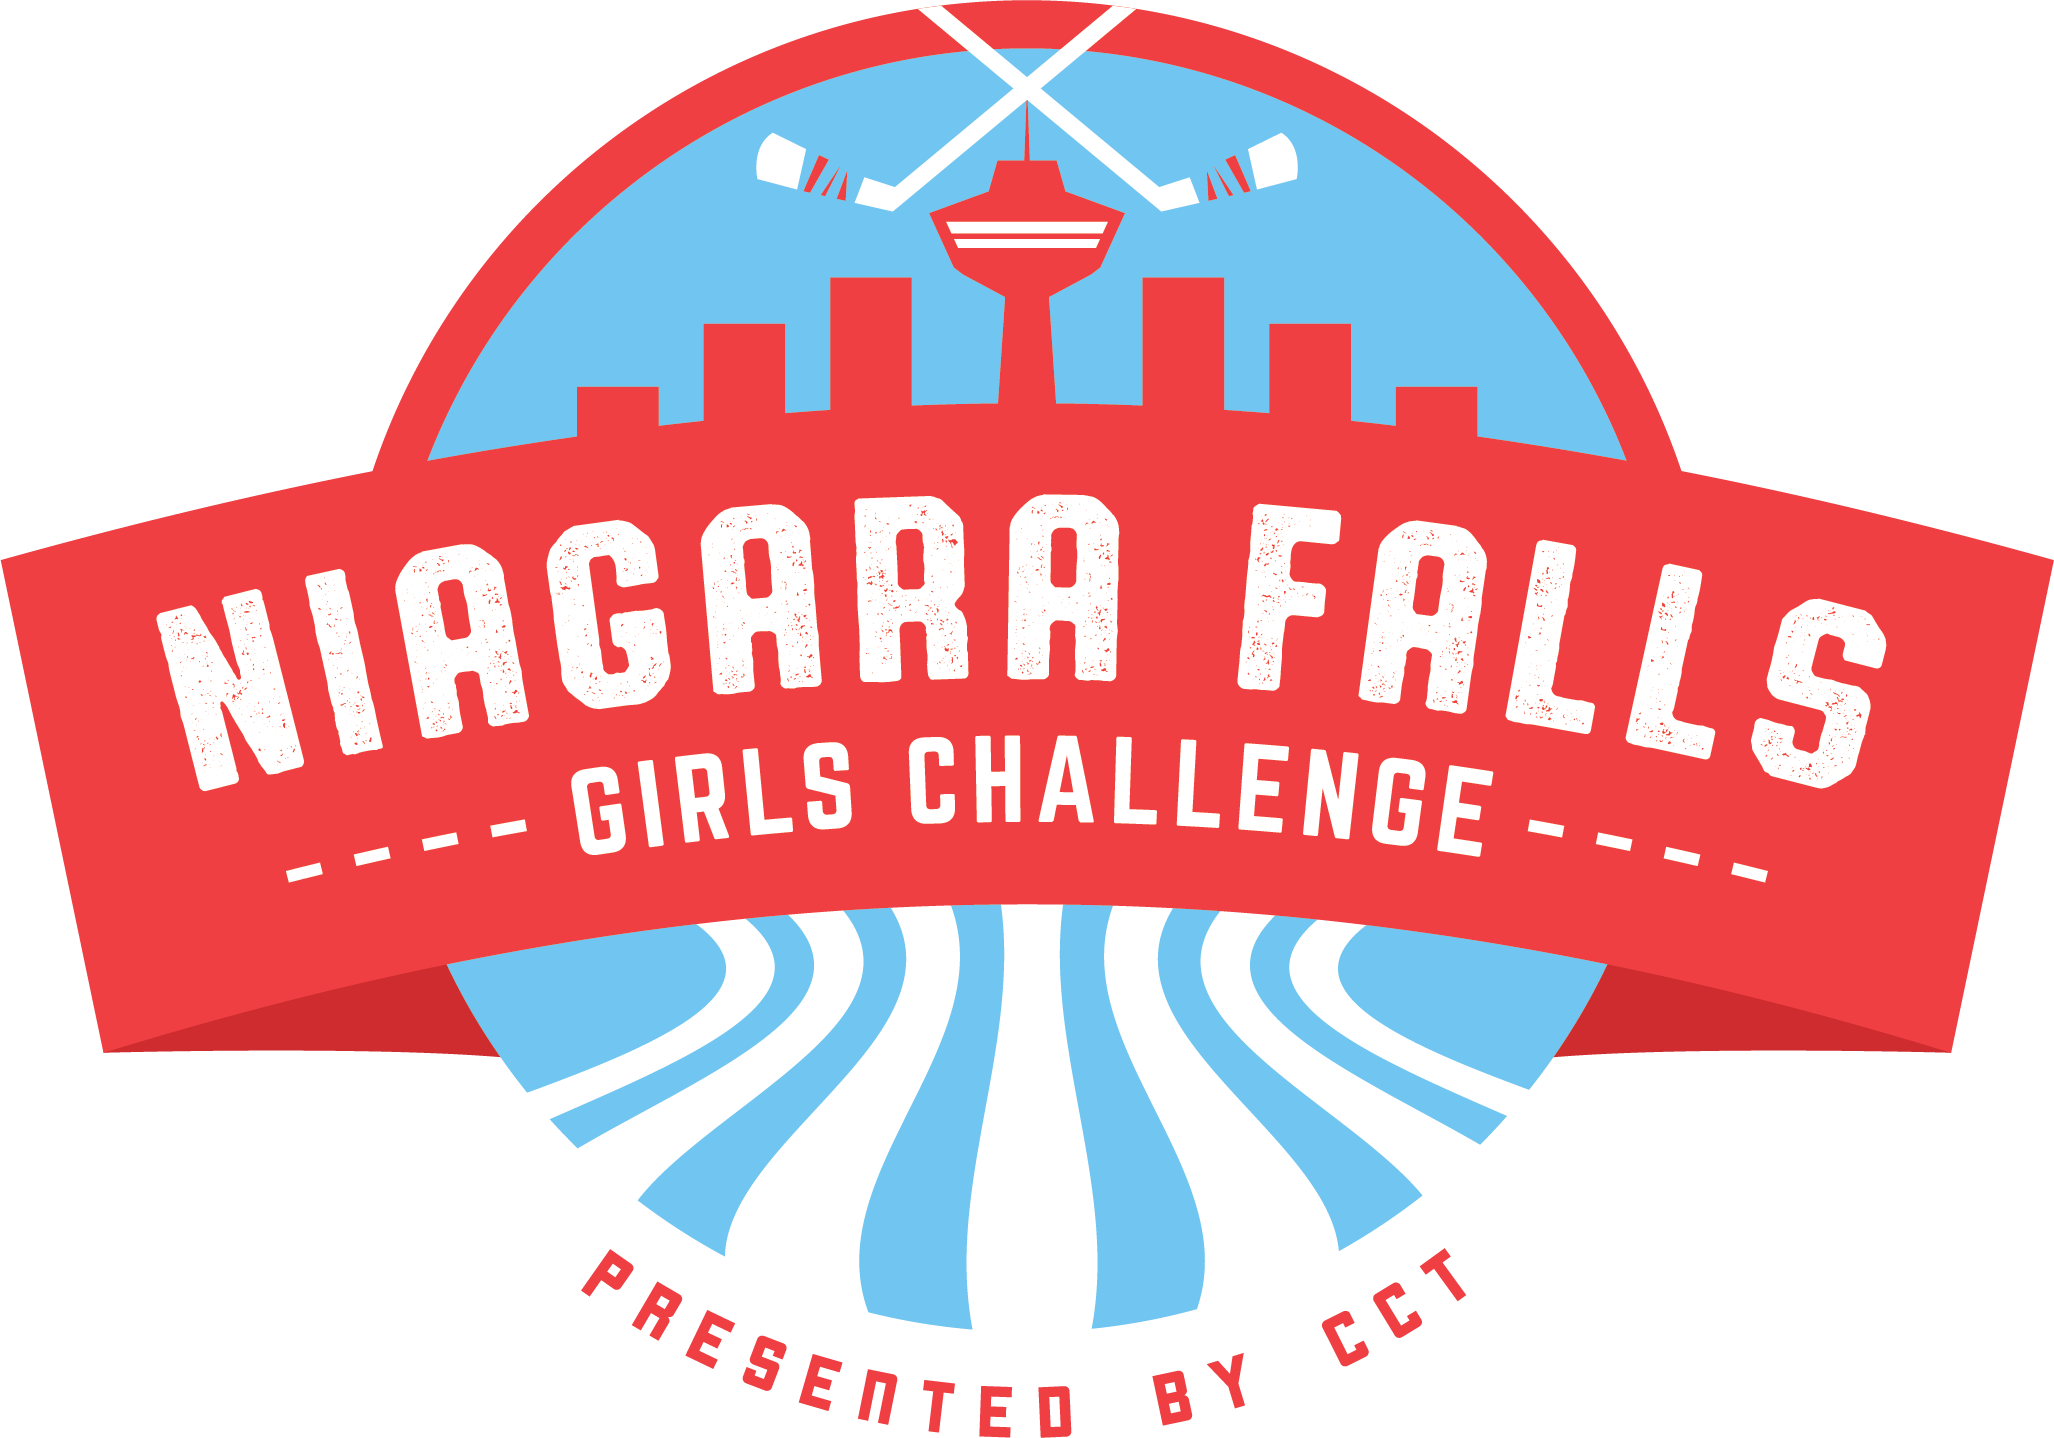 NIAGARA FALLS GIRLS CHALLENGE